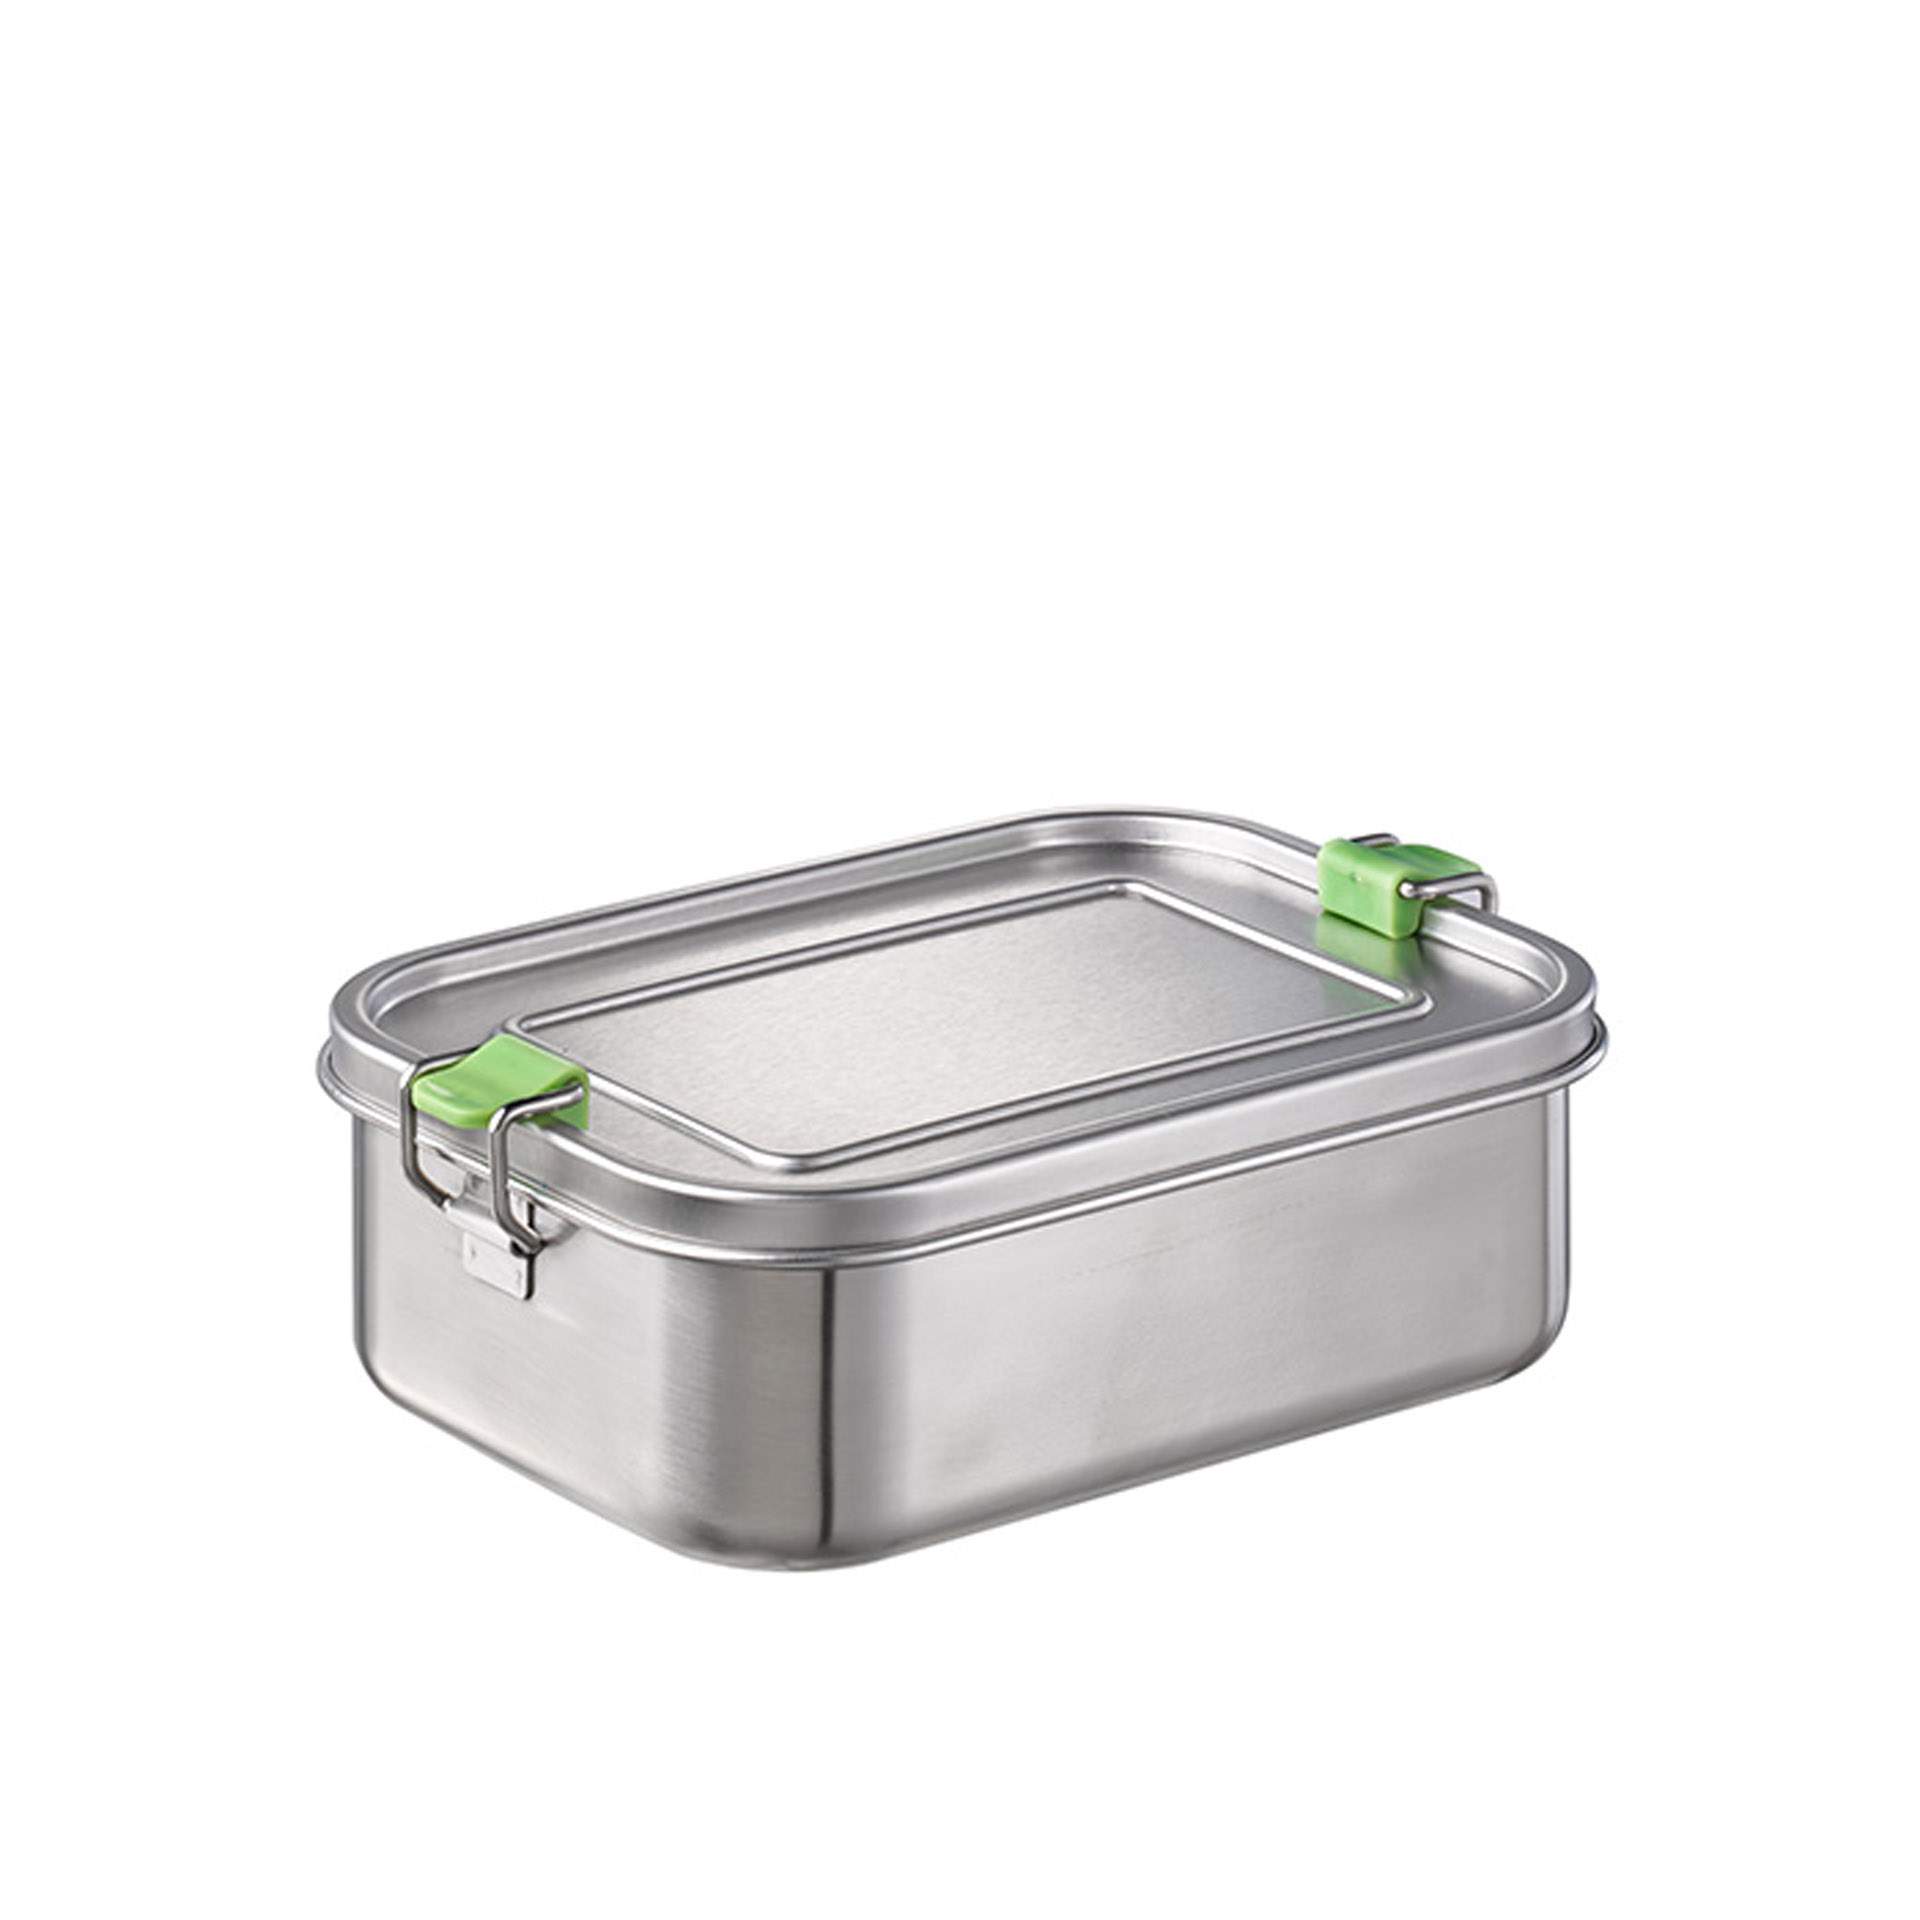 Lunchbox - L - Abm. 20,5 x 14,5 x 6,5 cm - Inhalt 1,1 l - Edelstahl - 66901-B